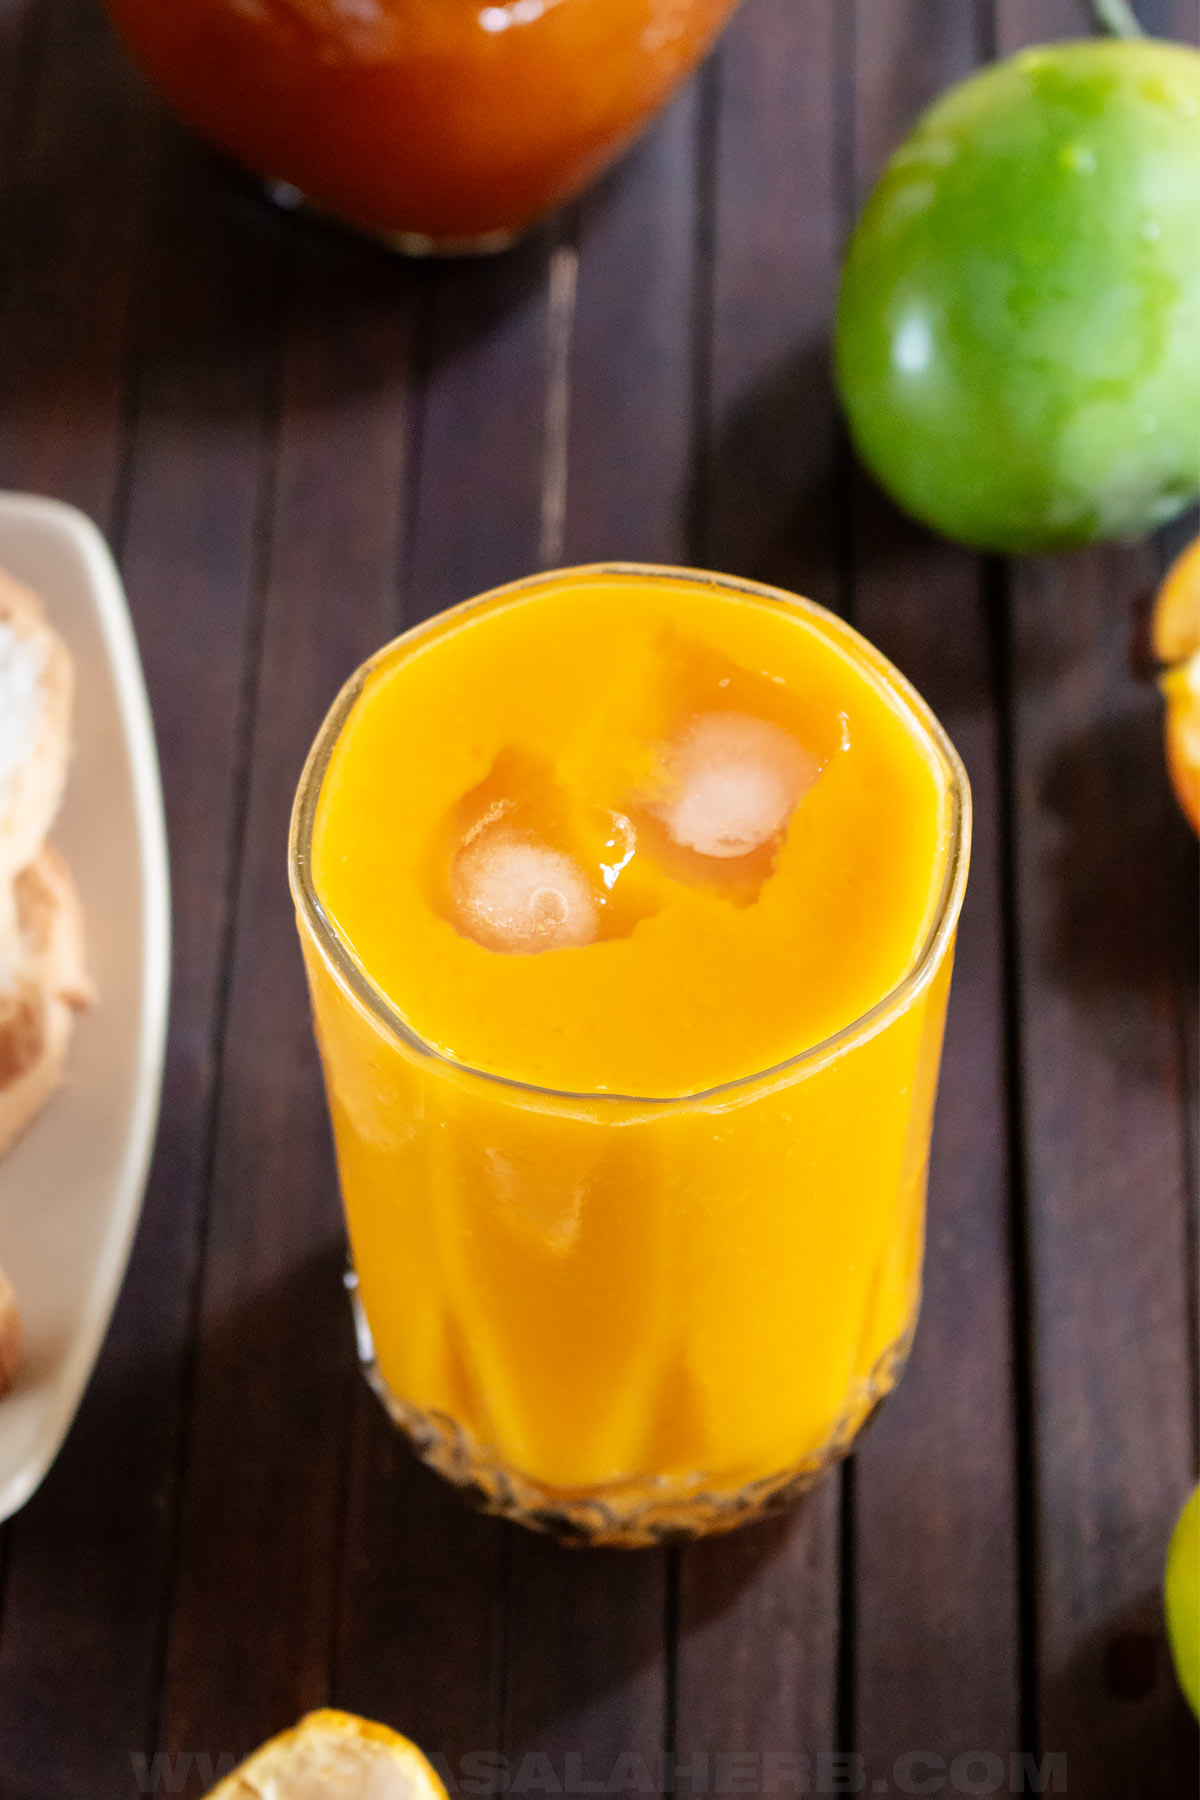 mango orange juice in a glass